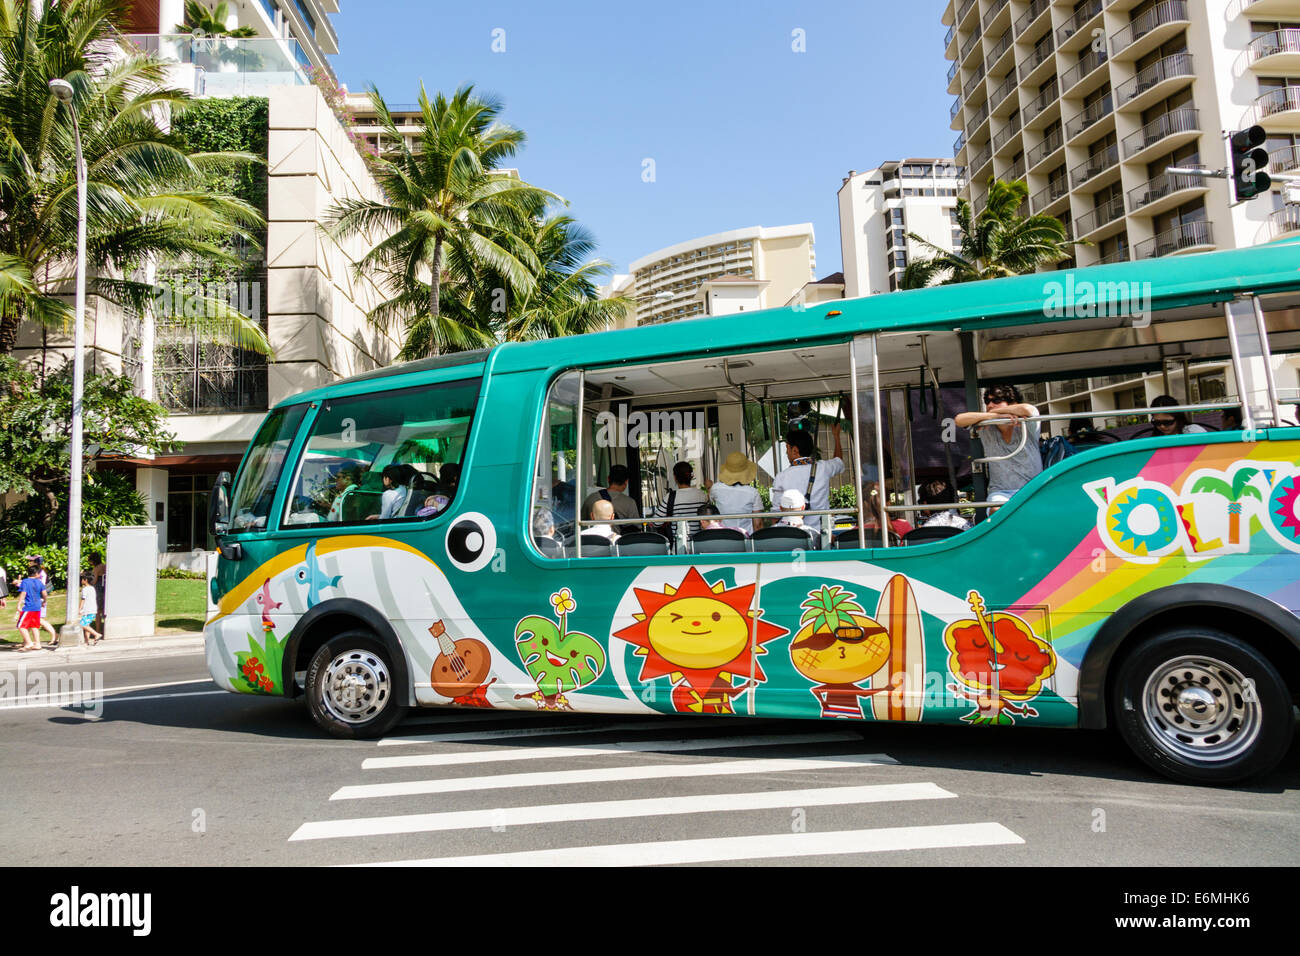 Honolulu Waikiki Beach Hawaii, Hawaiian, Oahu, Kalia Road, Bus, Bus, Besucher reisen Reise Tour touristischer Tourismus Wahrzeichen, Kultur kulturelle va Stockfoto